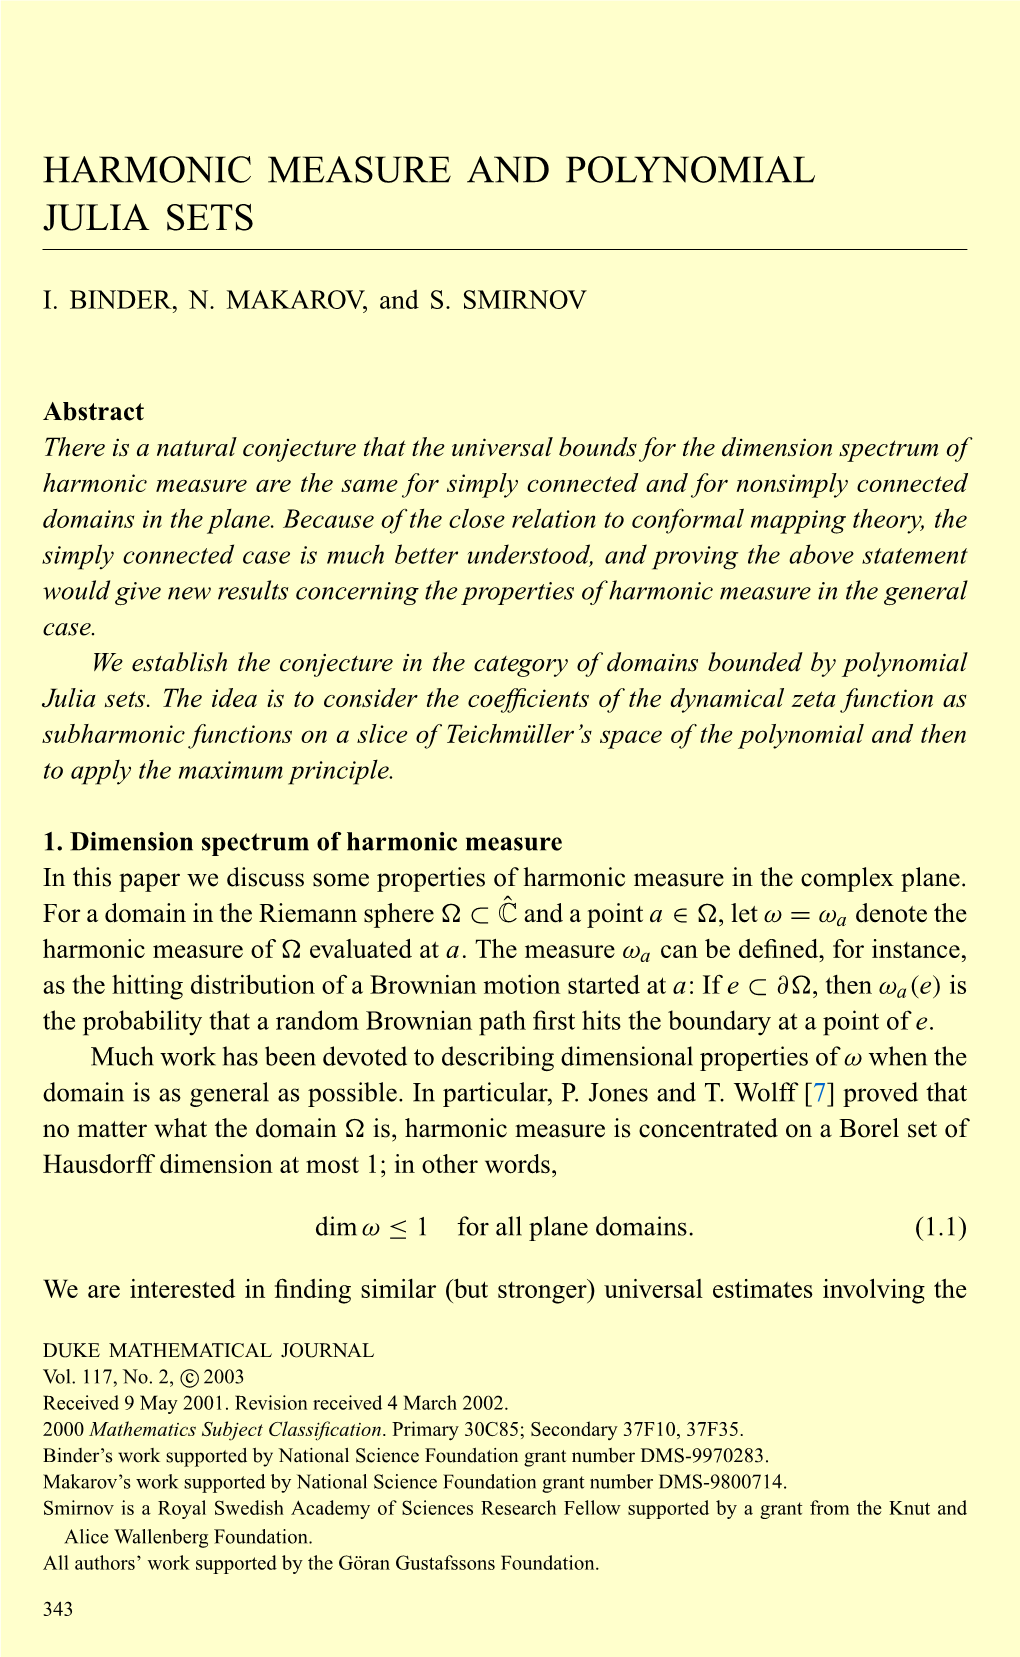 Harmonic Measure and Polynomial Julia Sets